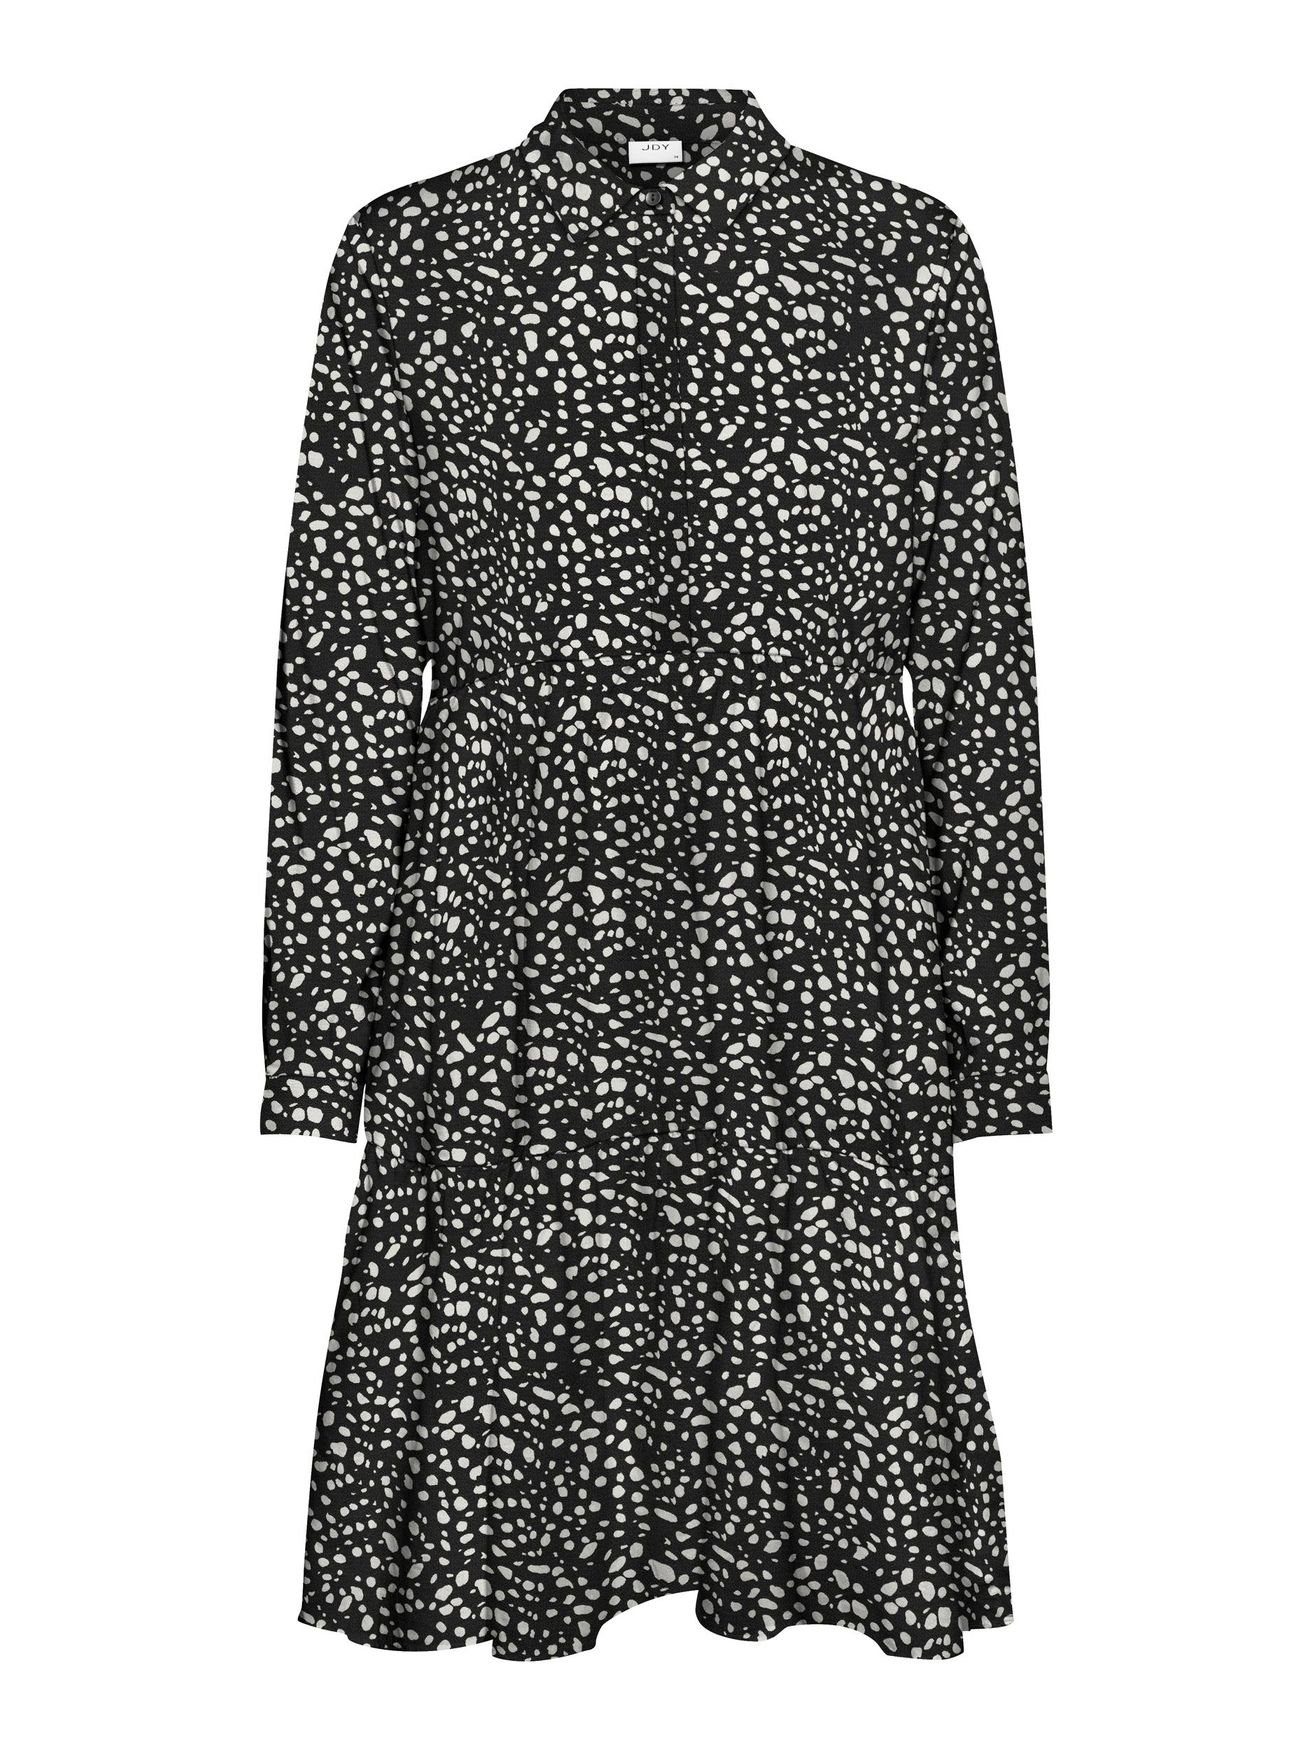 JACQUELINE de YONG Shirtkleid Kurzes Langarm Kleid Gemusterte Tunika Bluse JDYPIPER (lang) 4536 in Schwarz-6